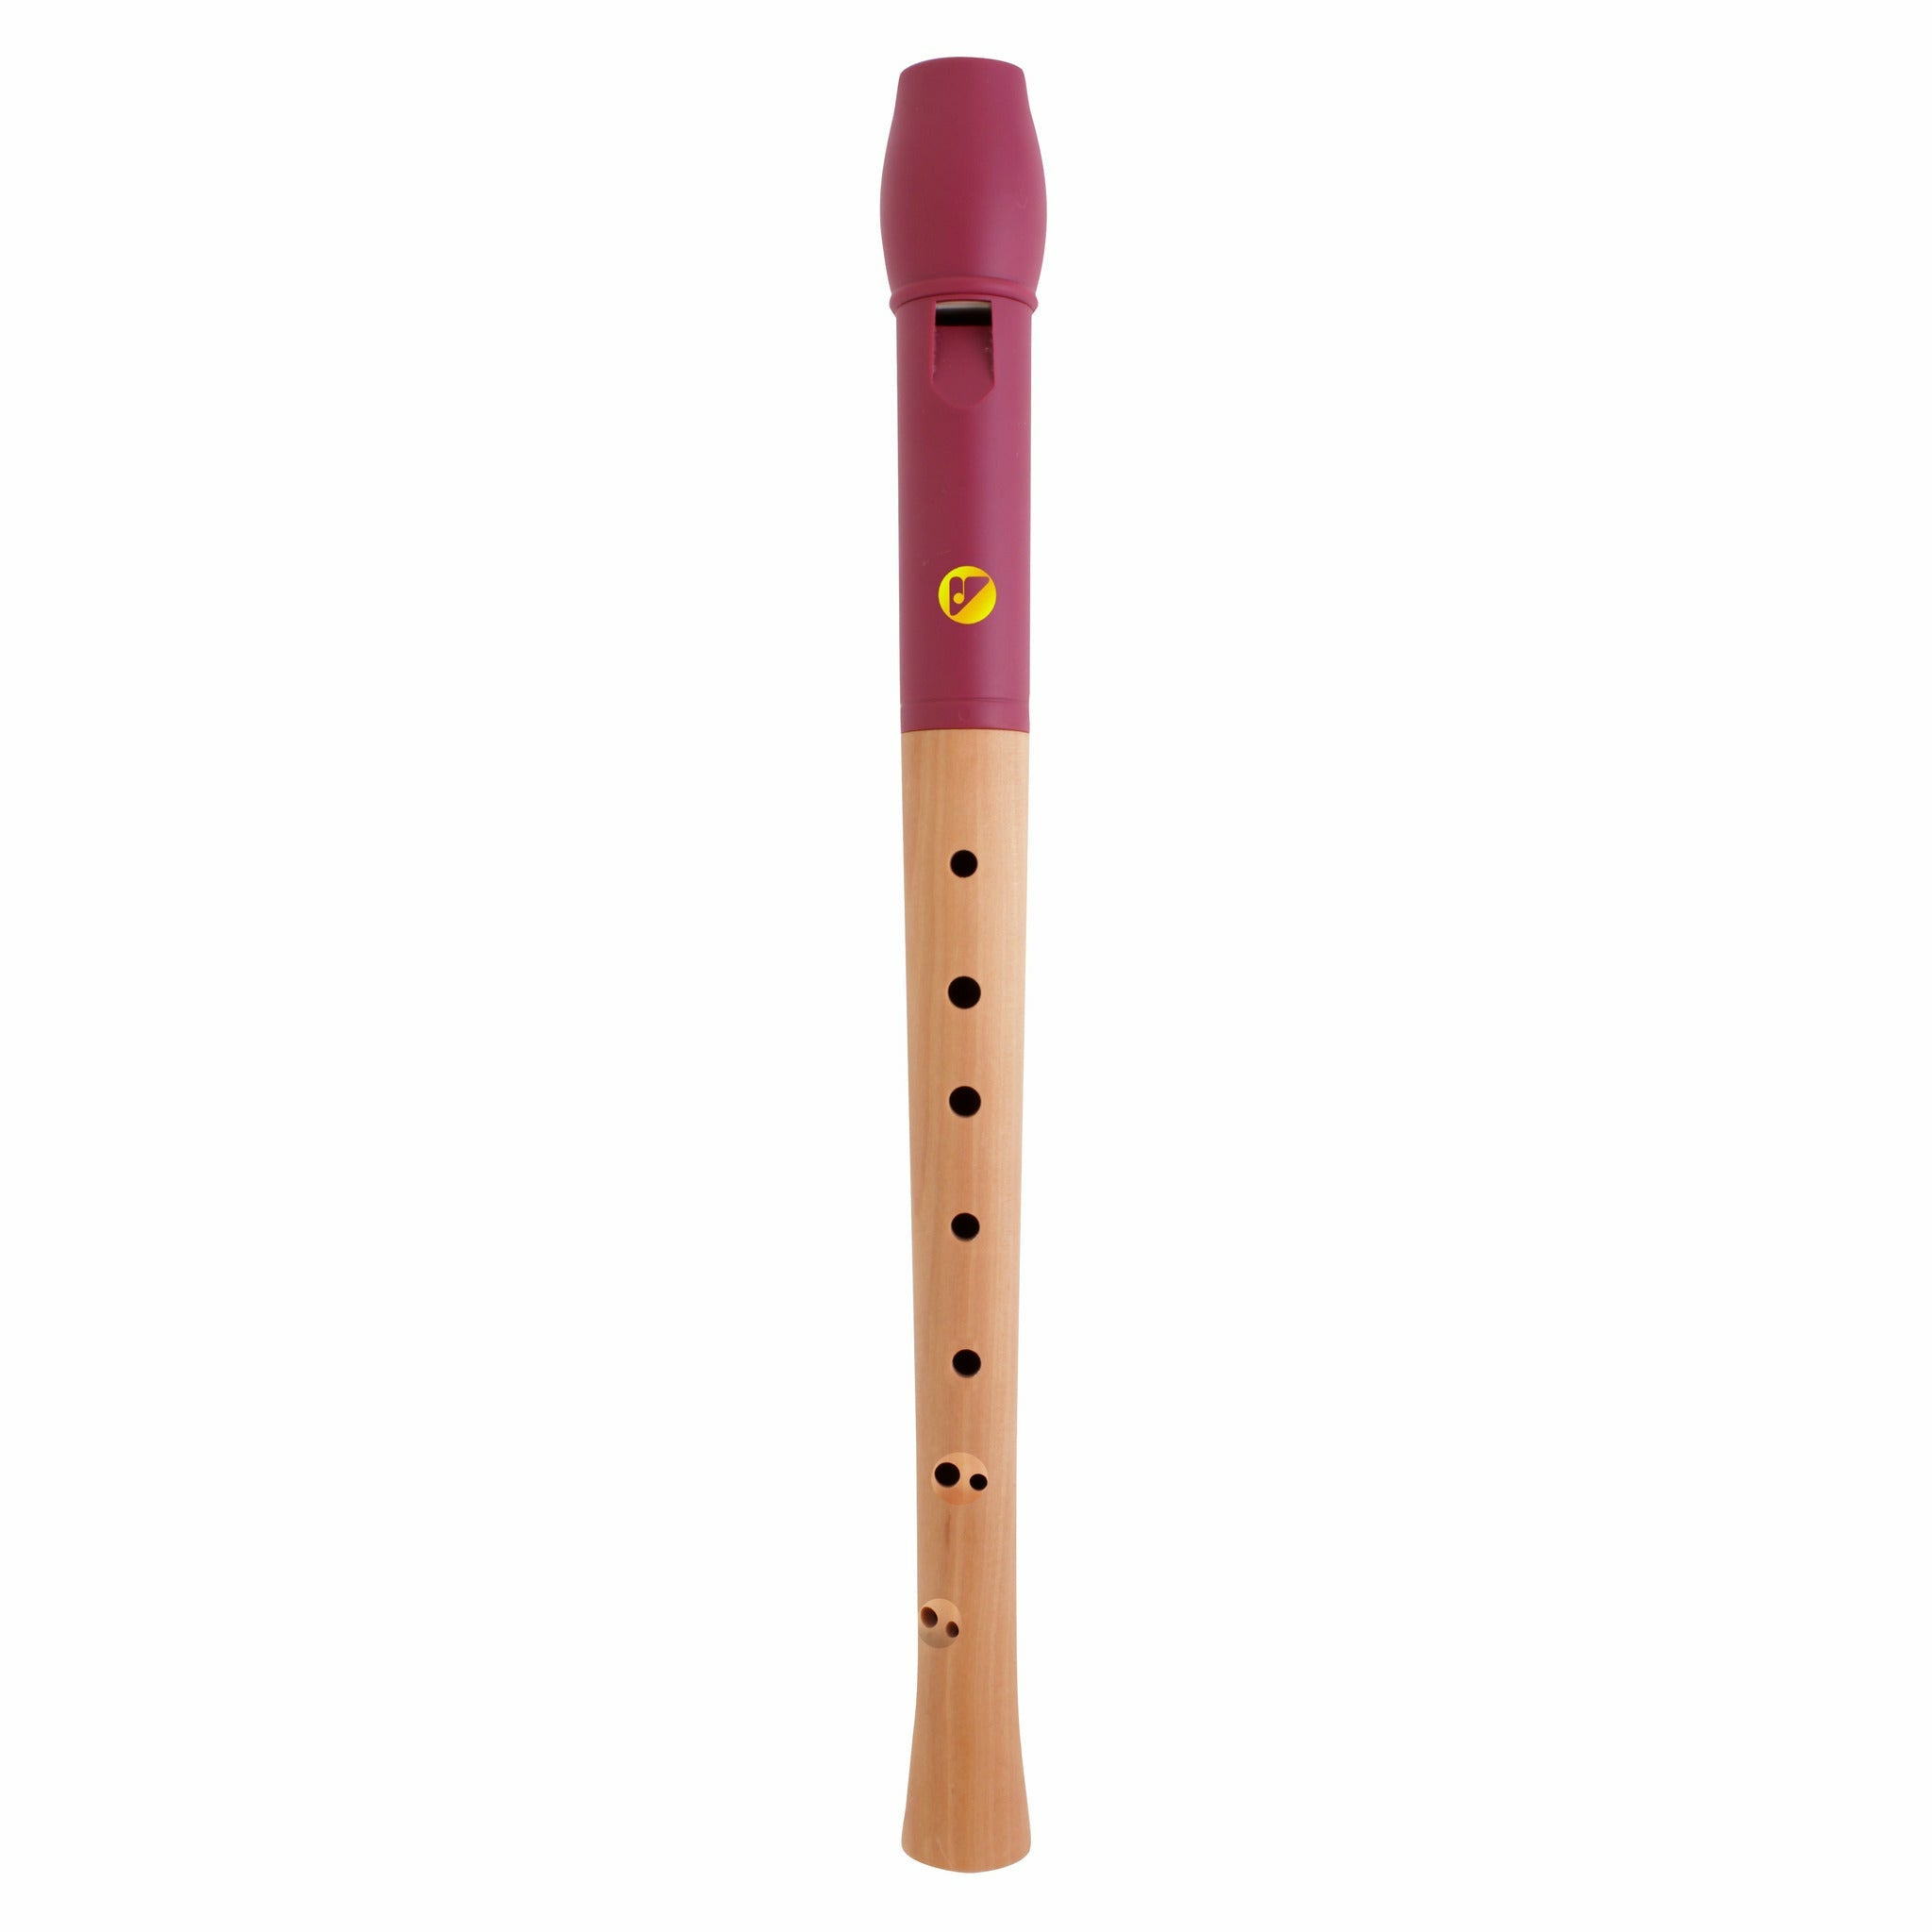 Voggenreiter | Voggys Holz-Kunststoff-Blockflöte (roter Flötenkopf), barocke Griffweise